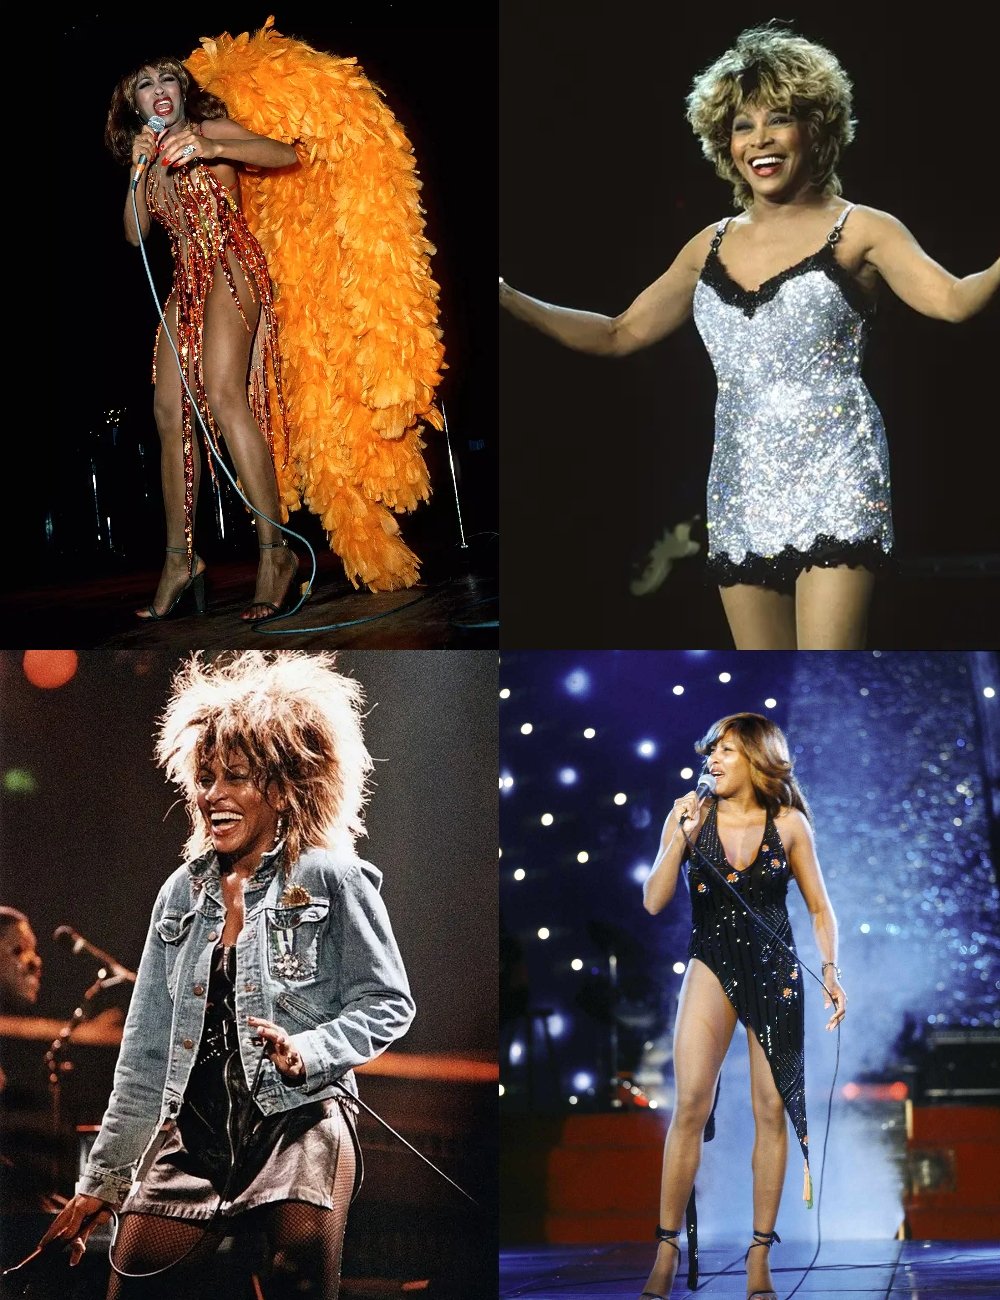 Tina Turner - mulheres do rock - mulheres do rock - mulheres do rock - mulheres do rock - https://stealthelook.com.br